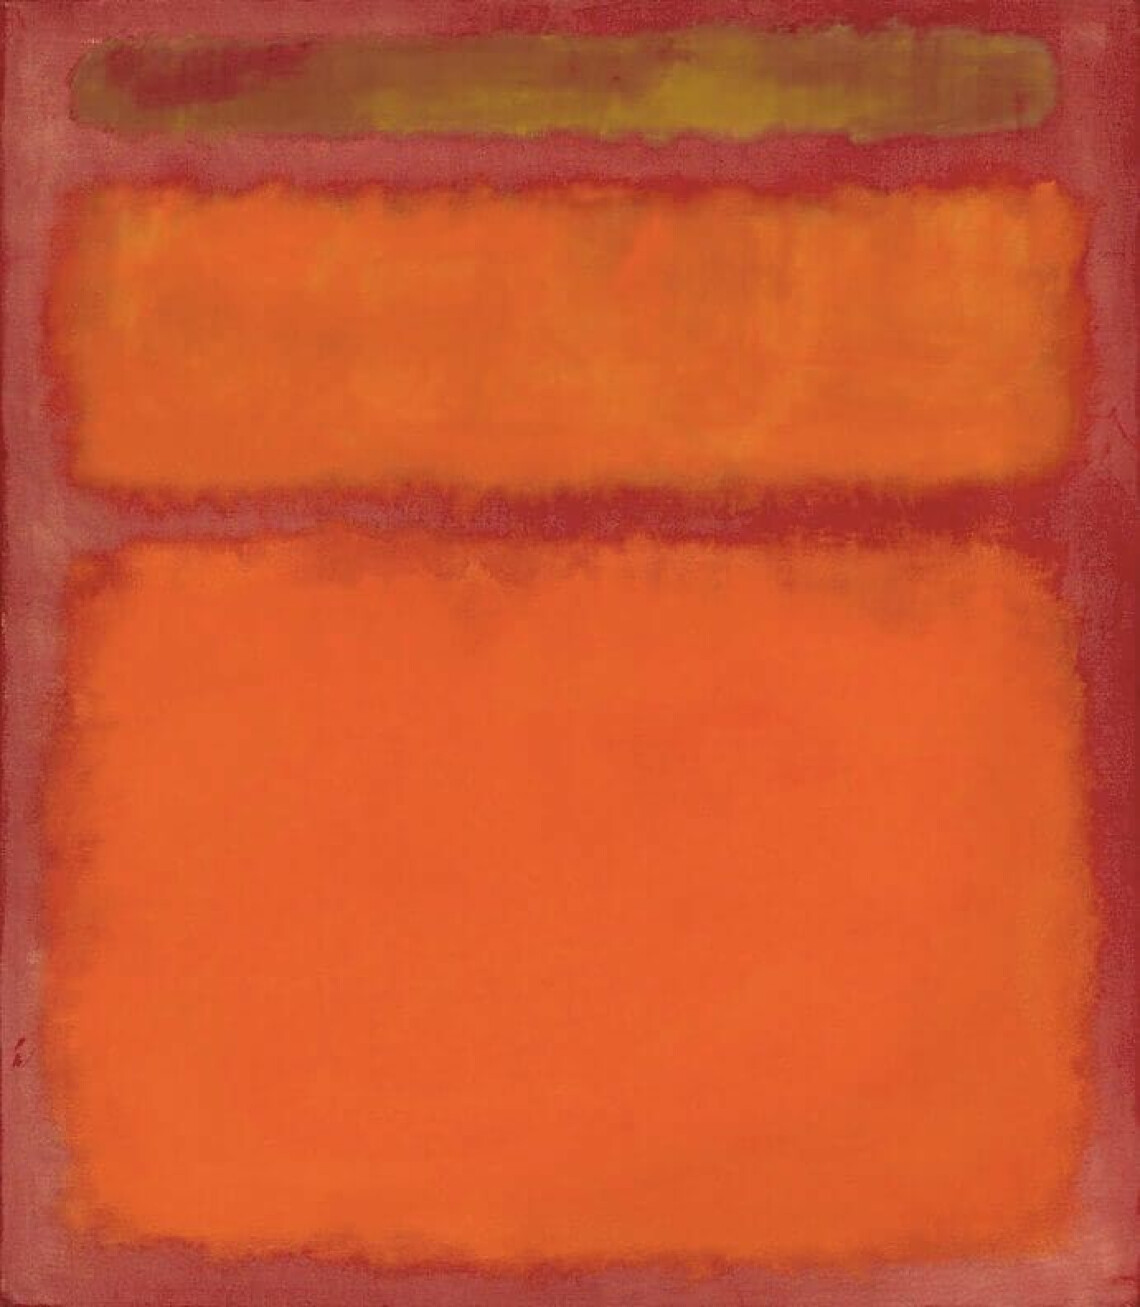  « Orange, Red, Yellow » de Mark Rothko